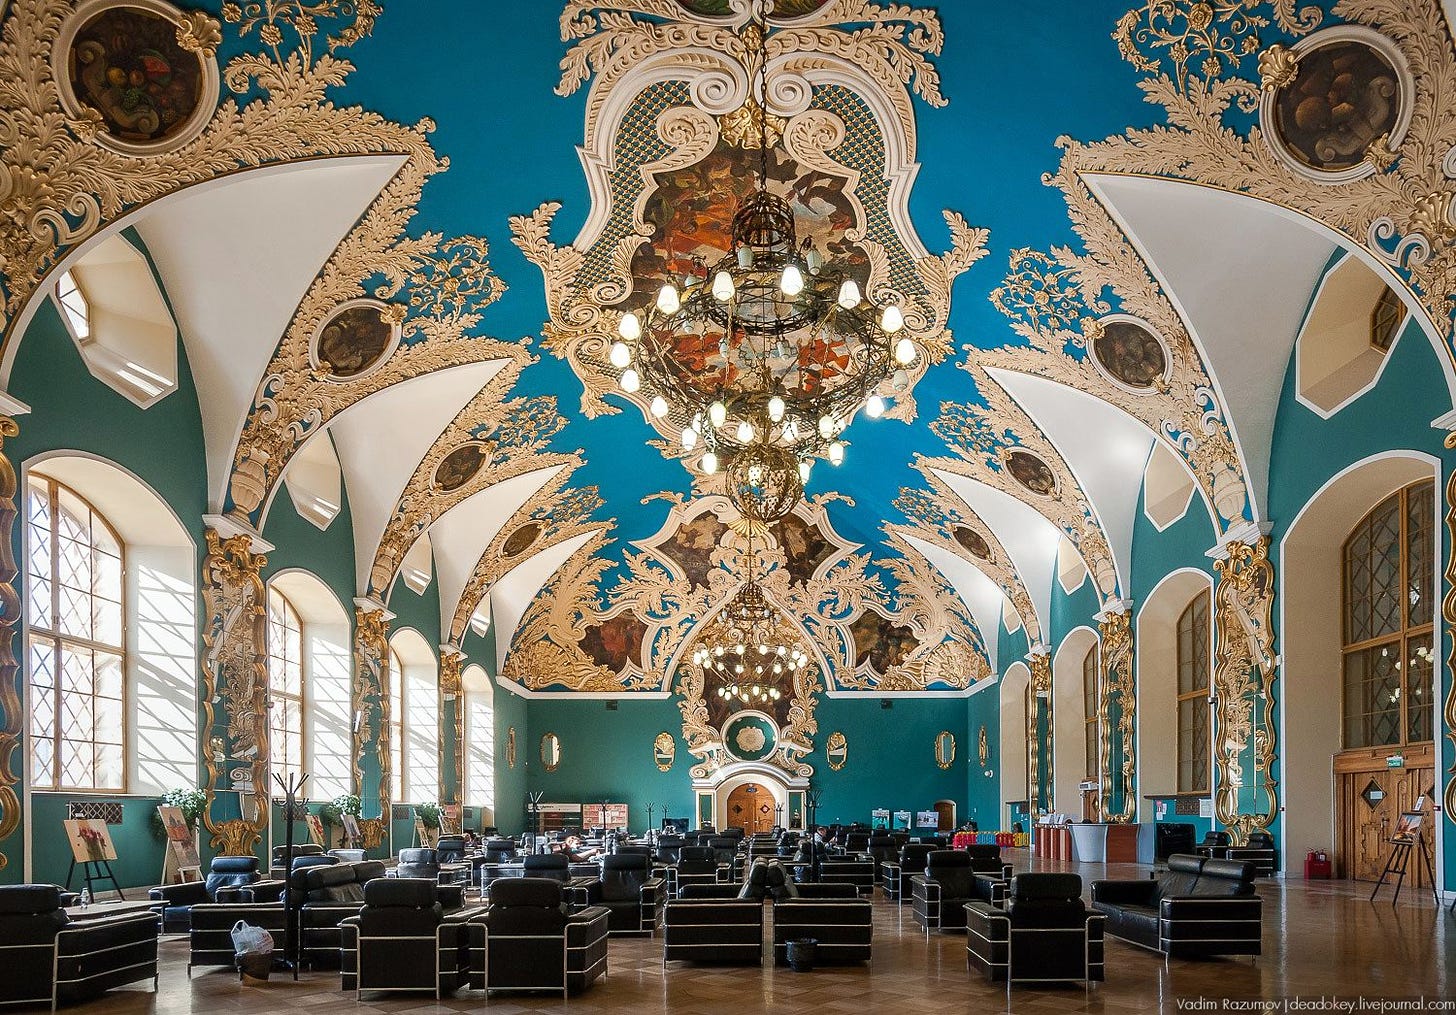 Amazing Interiors of Kazansky Railway Station · Russia Travel Blog